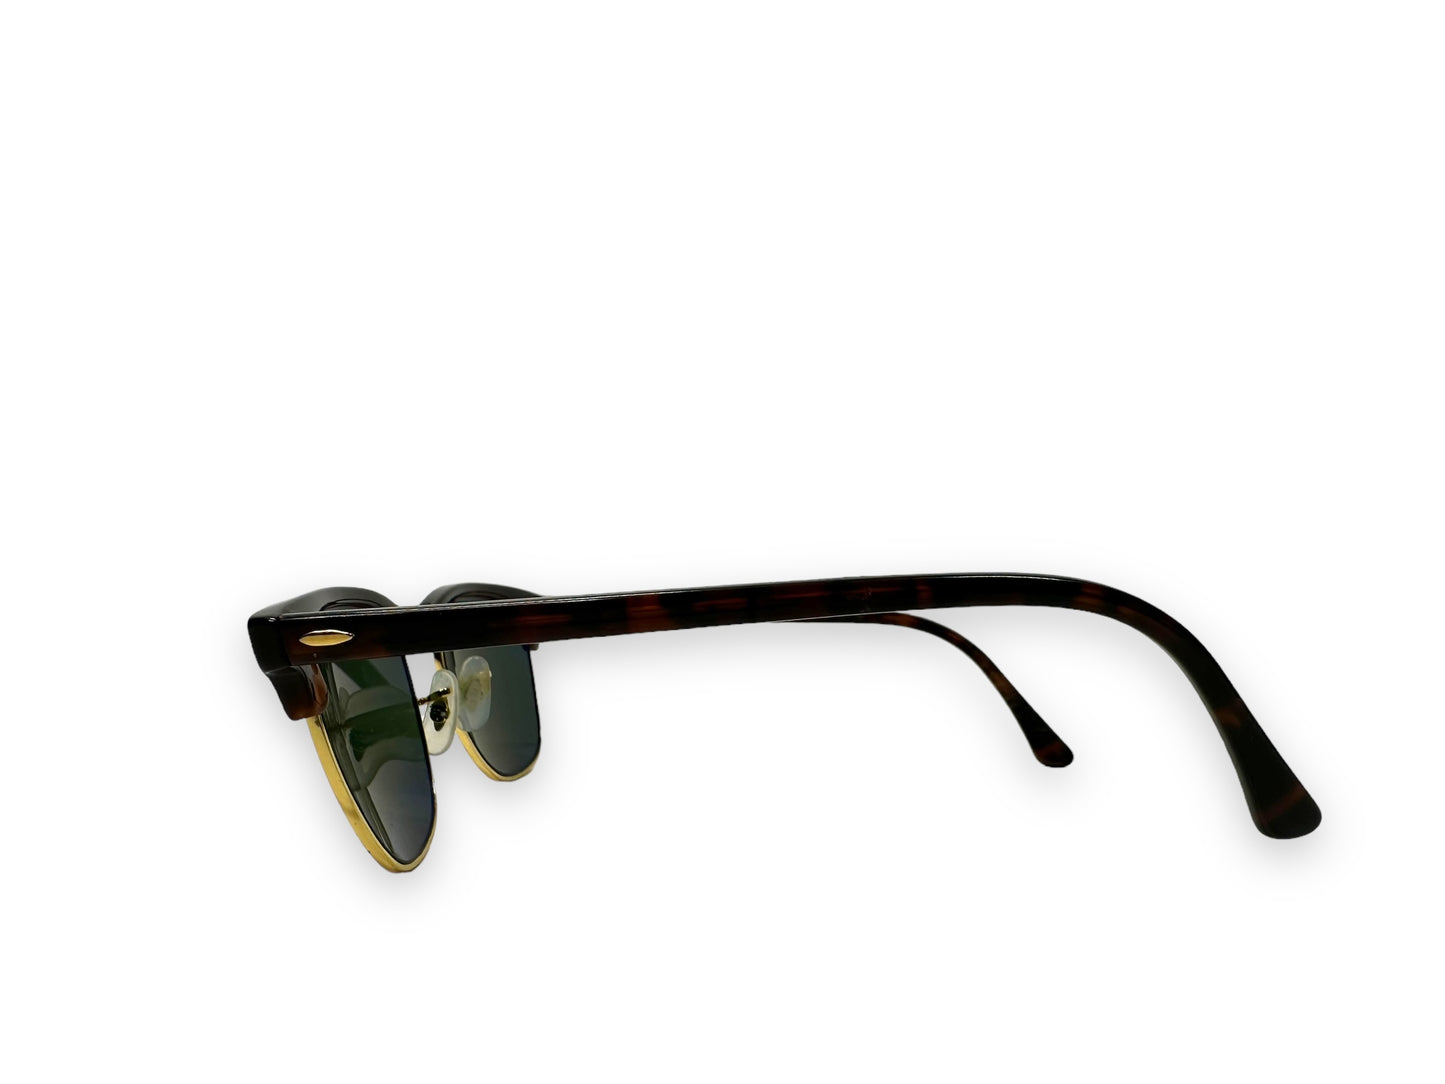 Ray Ban “Club Master” Sunglasses